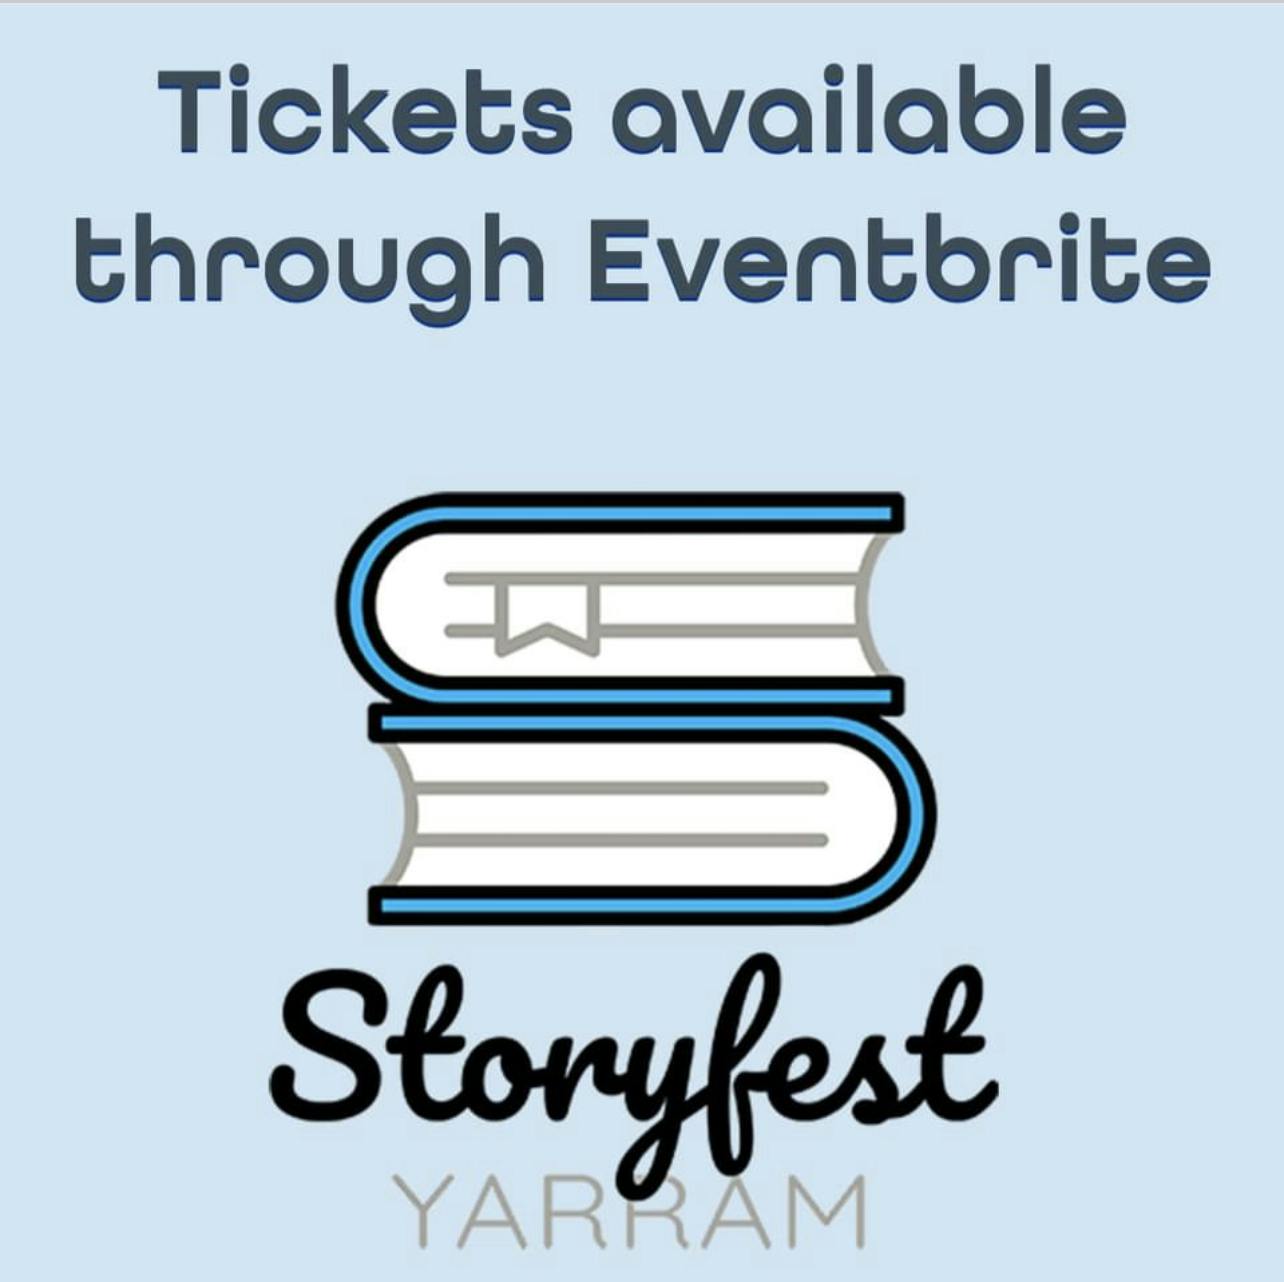 Storyfest 2022